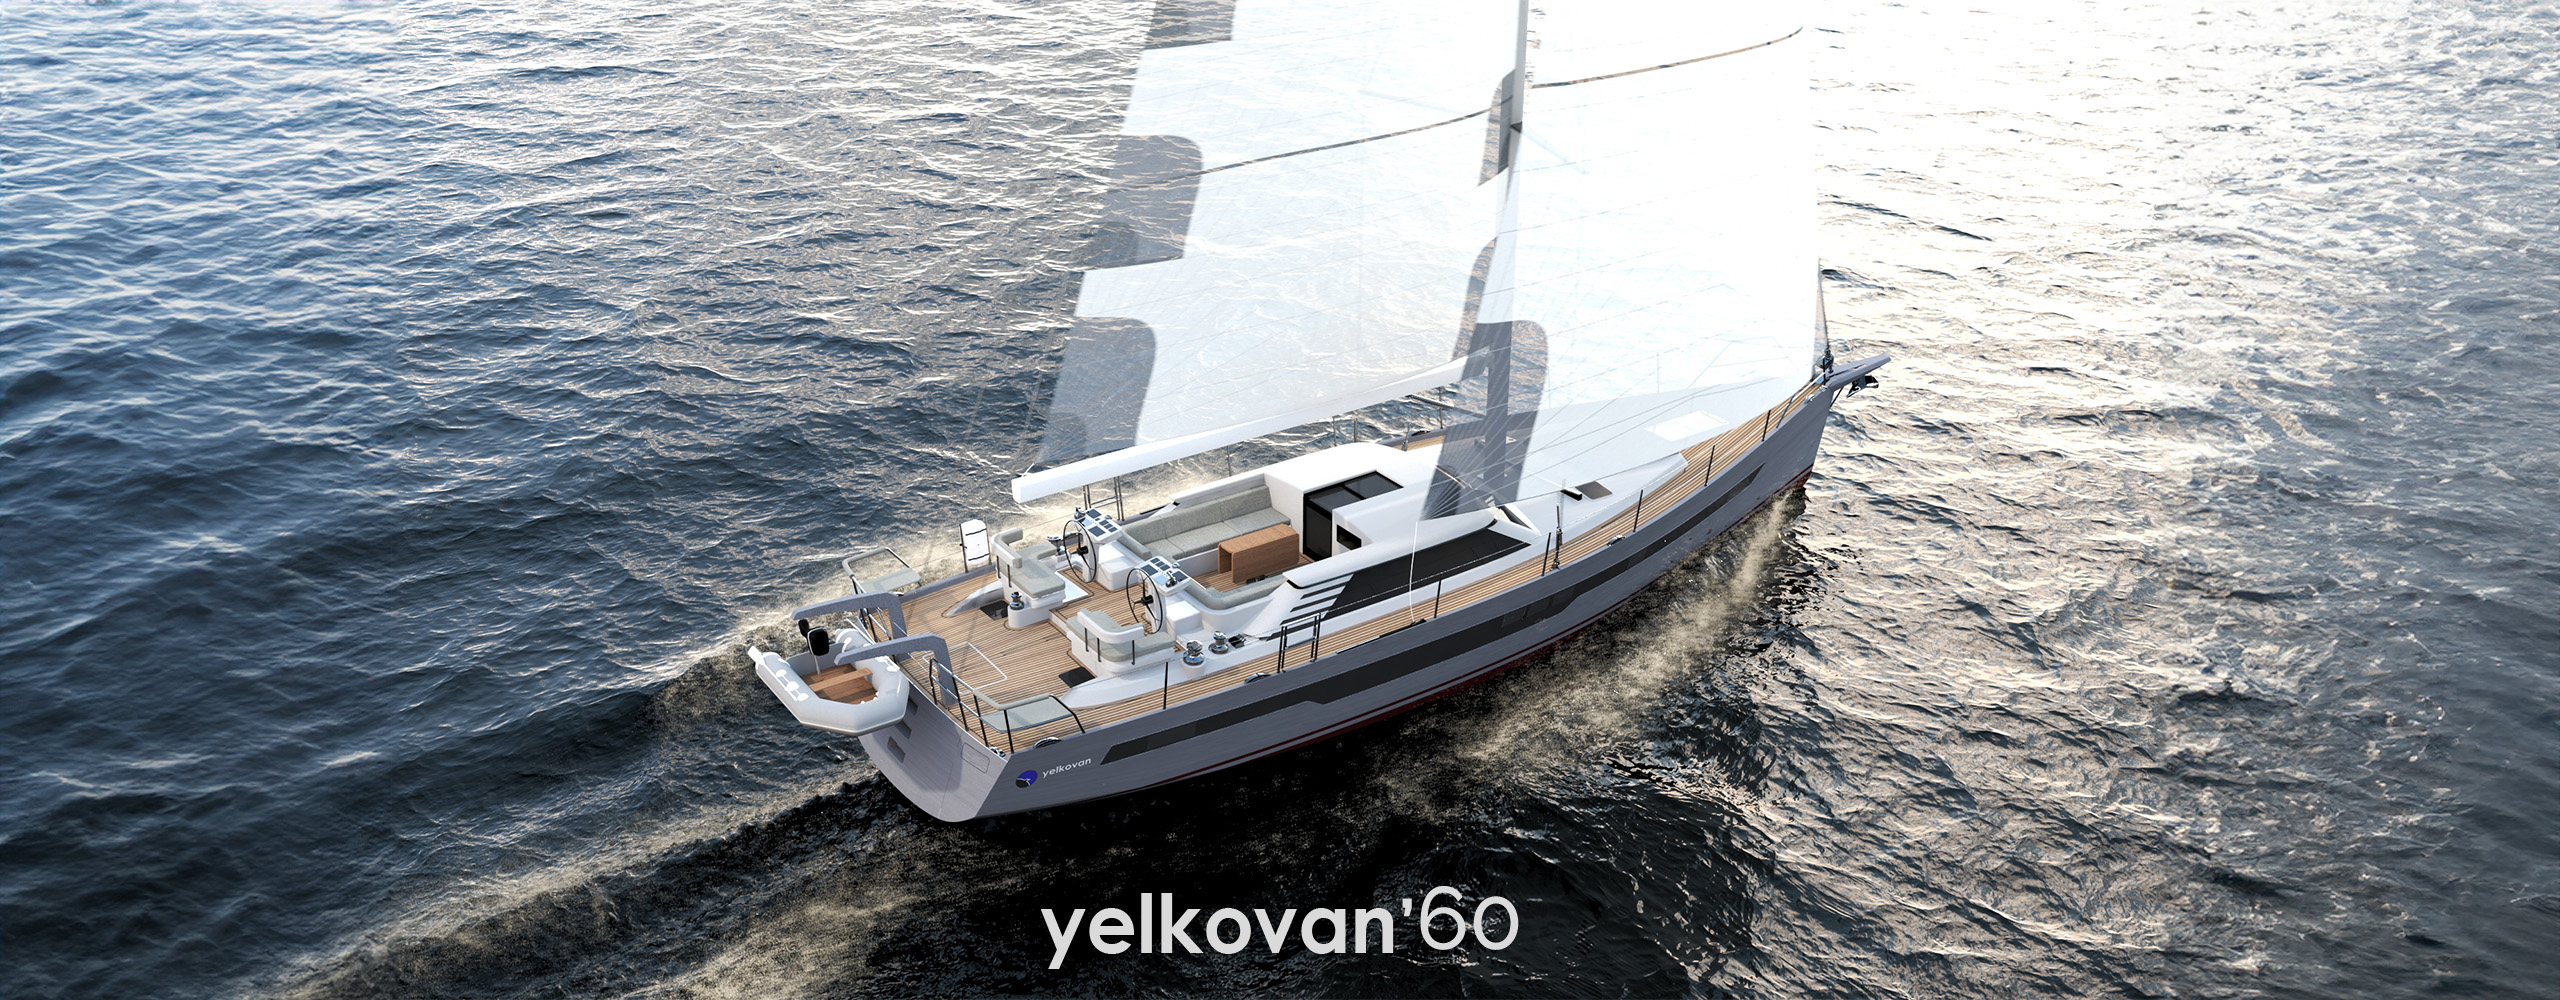 Yelkovan 60 Sailing